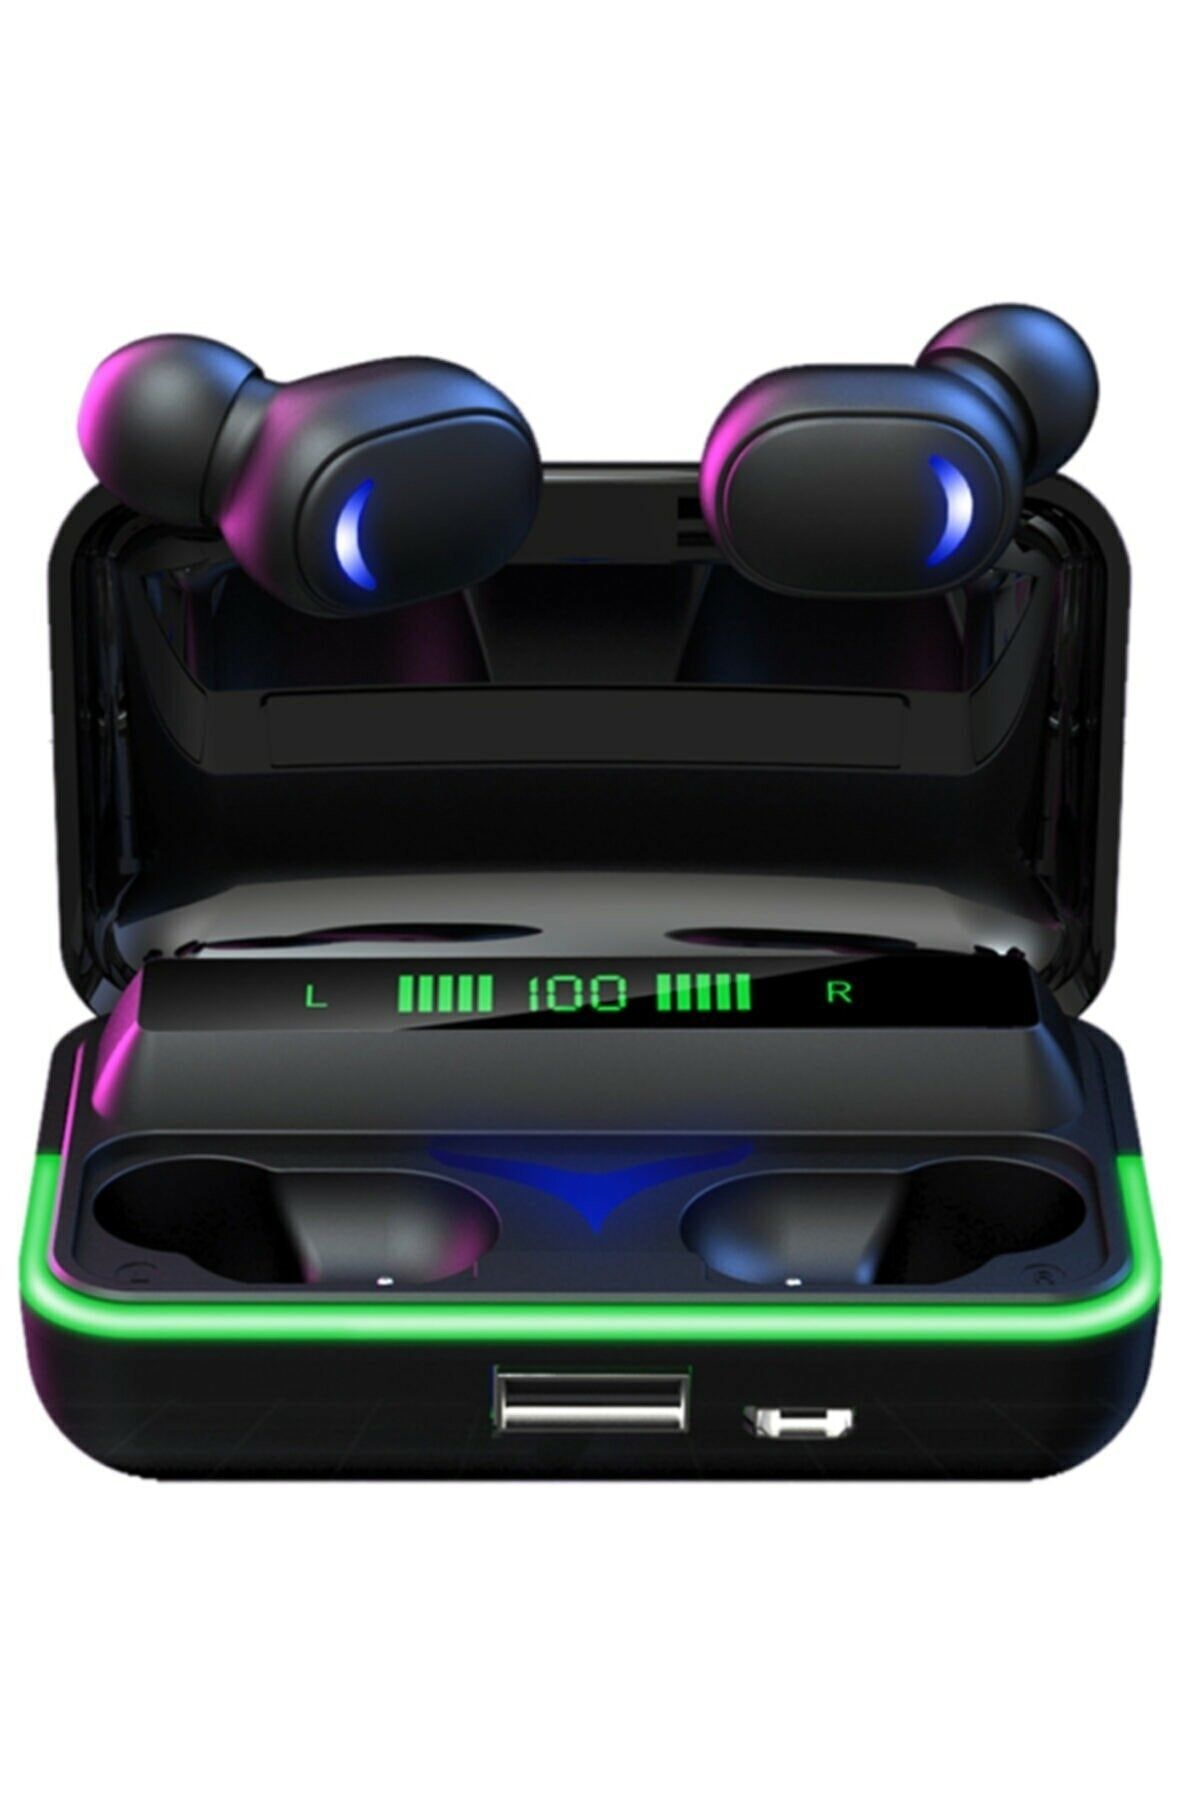 Favors E10 Bluetooth Oyuncu Kulaklığı Işıklı Led Göstergeli Kulak Içi Bluetooth Kulaklık V5.1